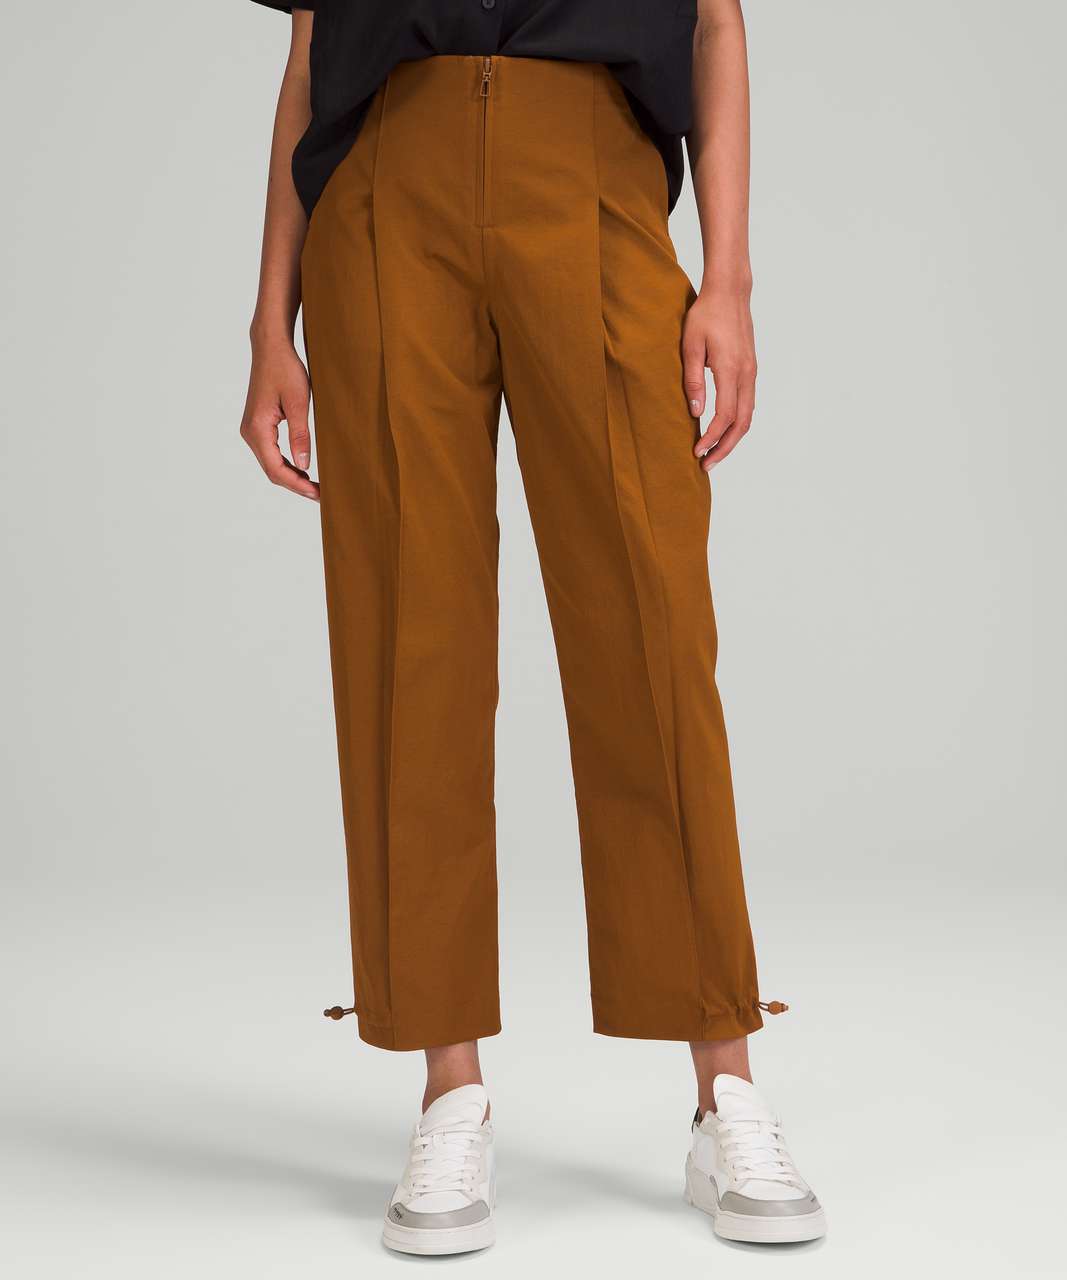 Lululemon Cotton-Blend Twill Trouser *7/8 Length - Copper Brown